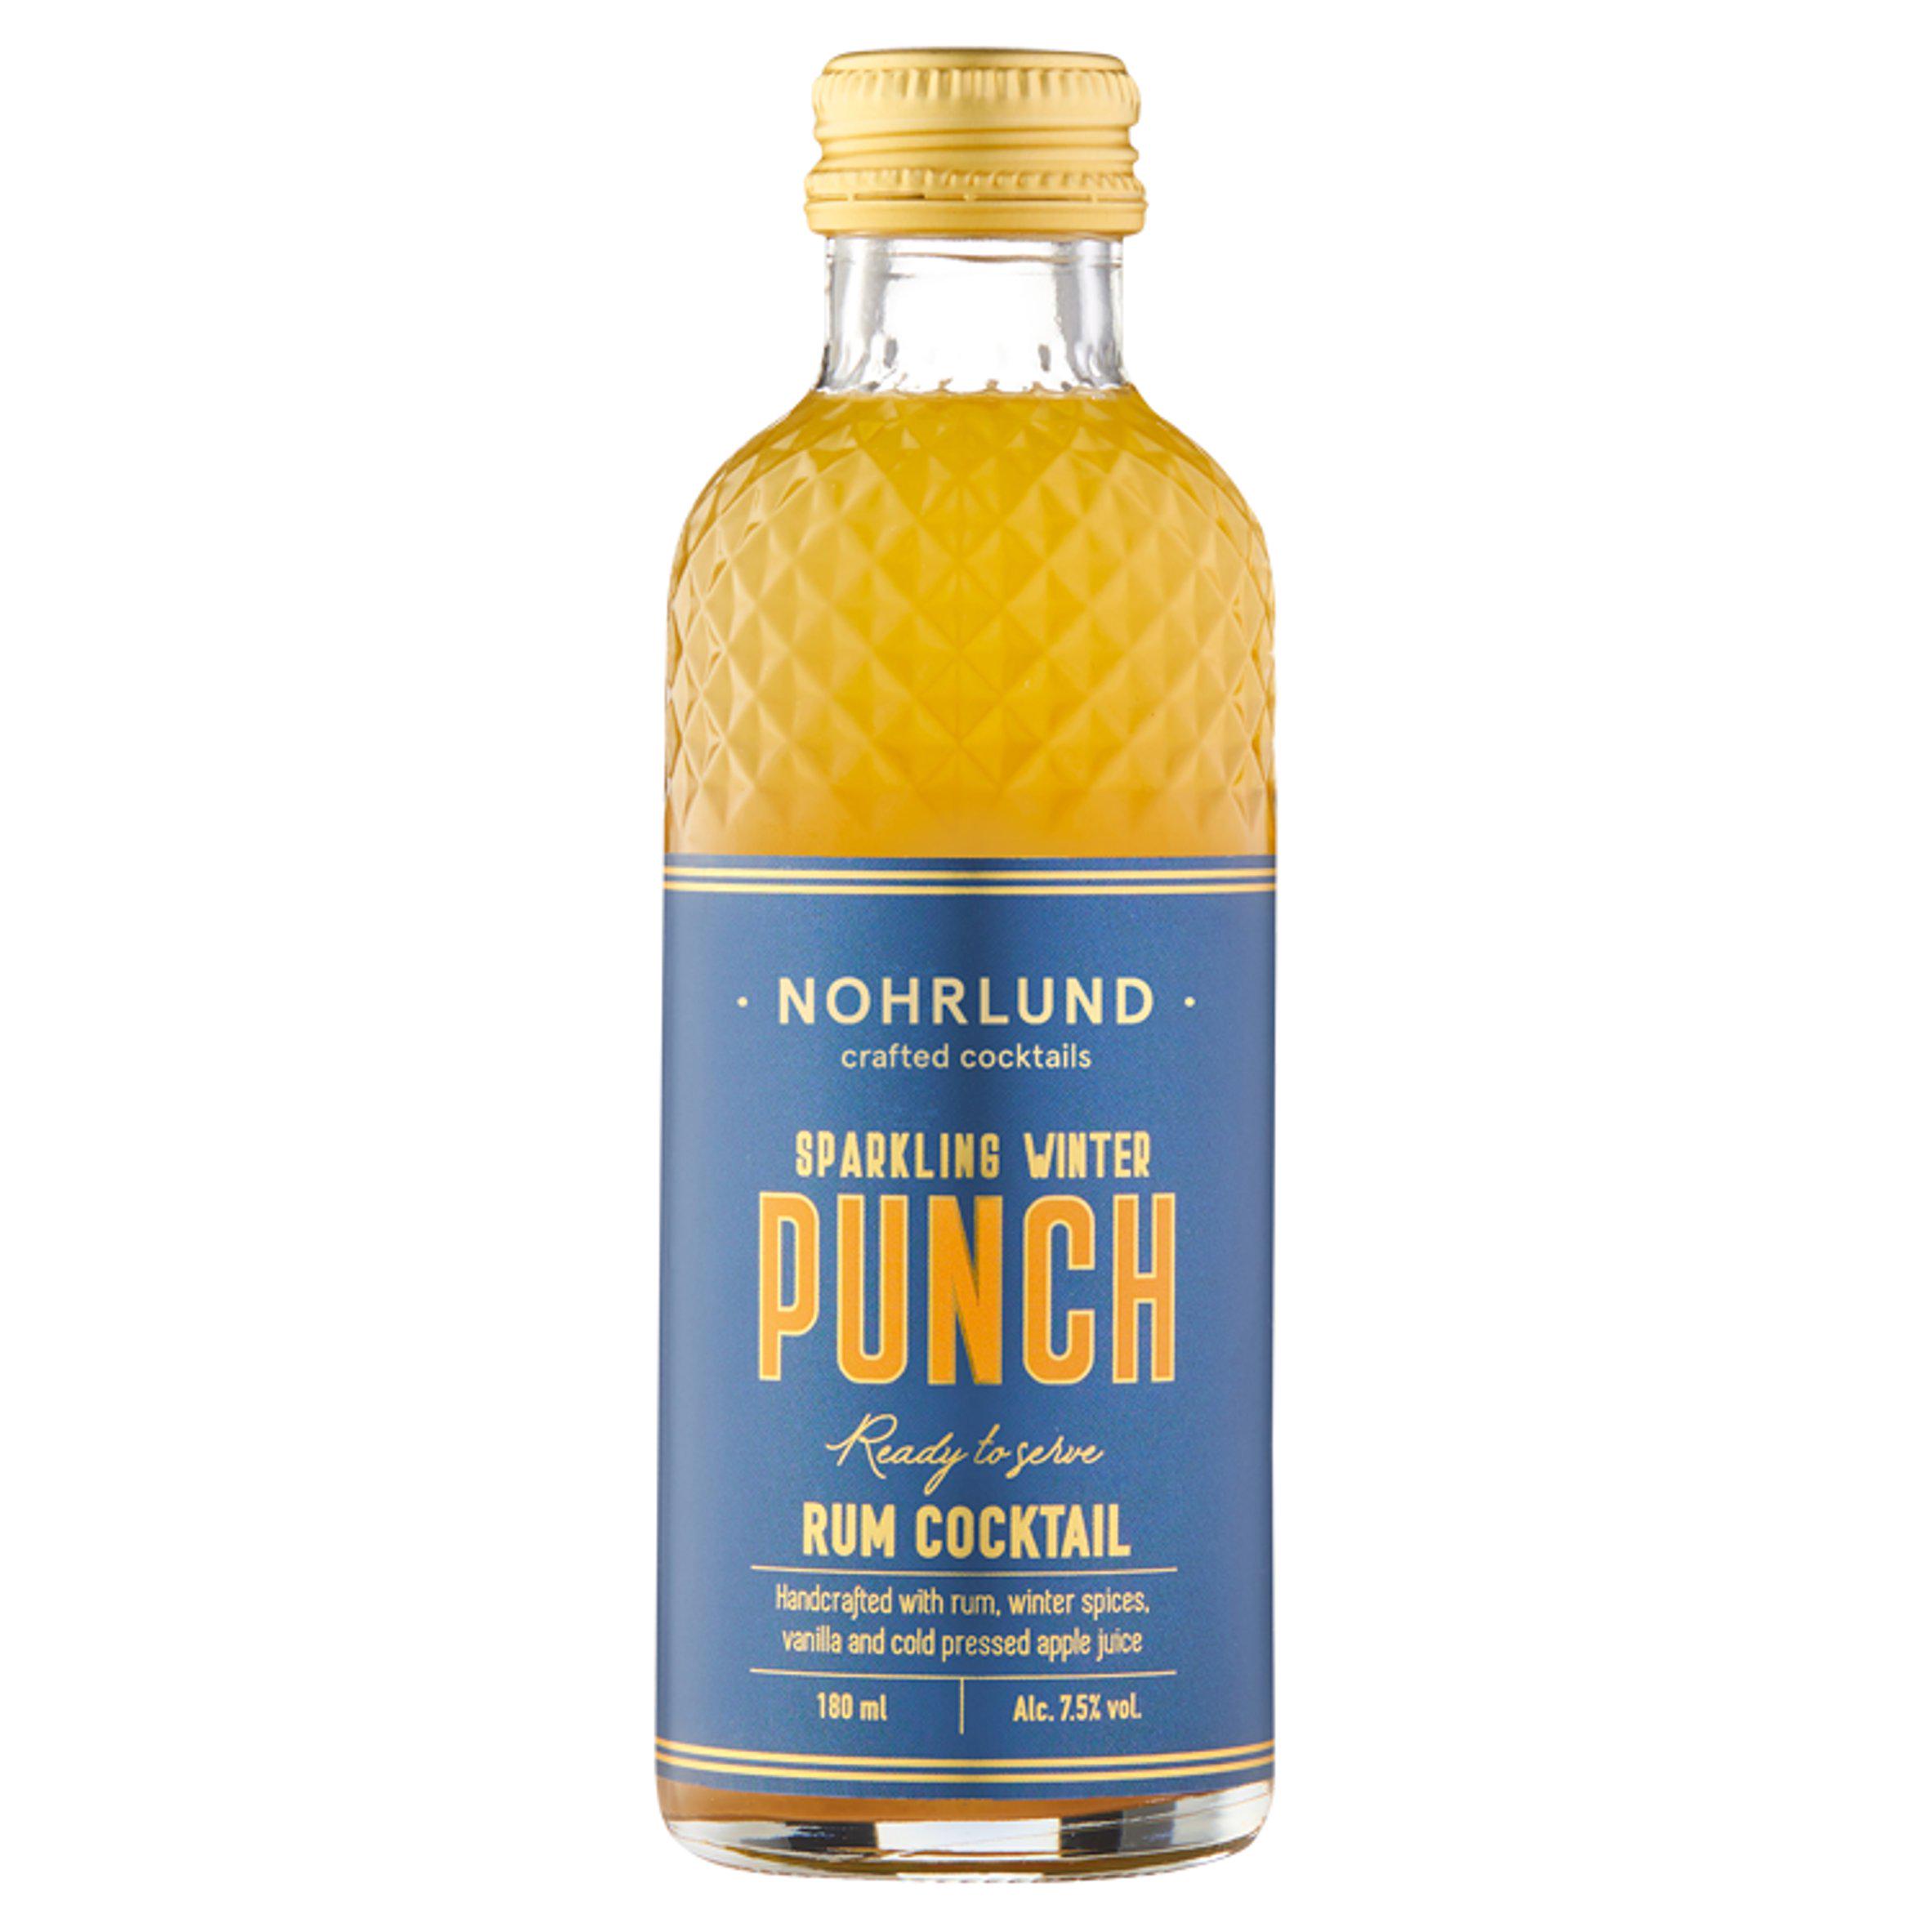 Nohrlund - Sparkling Winter Punch cocktail- 180 ml - limited edition